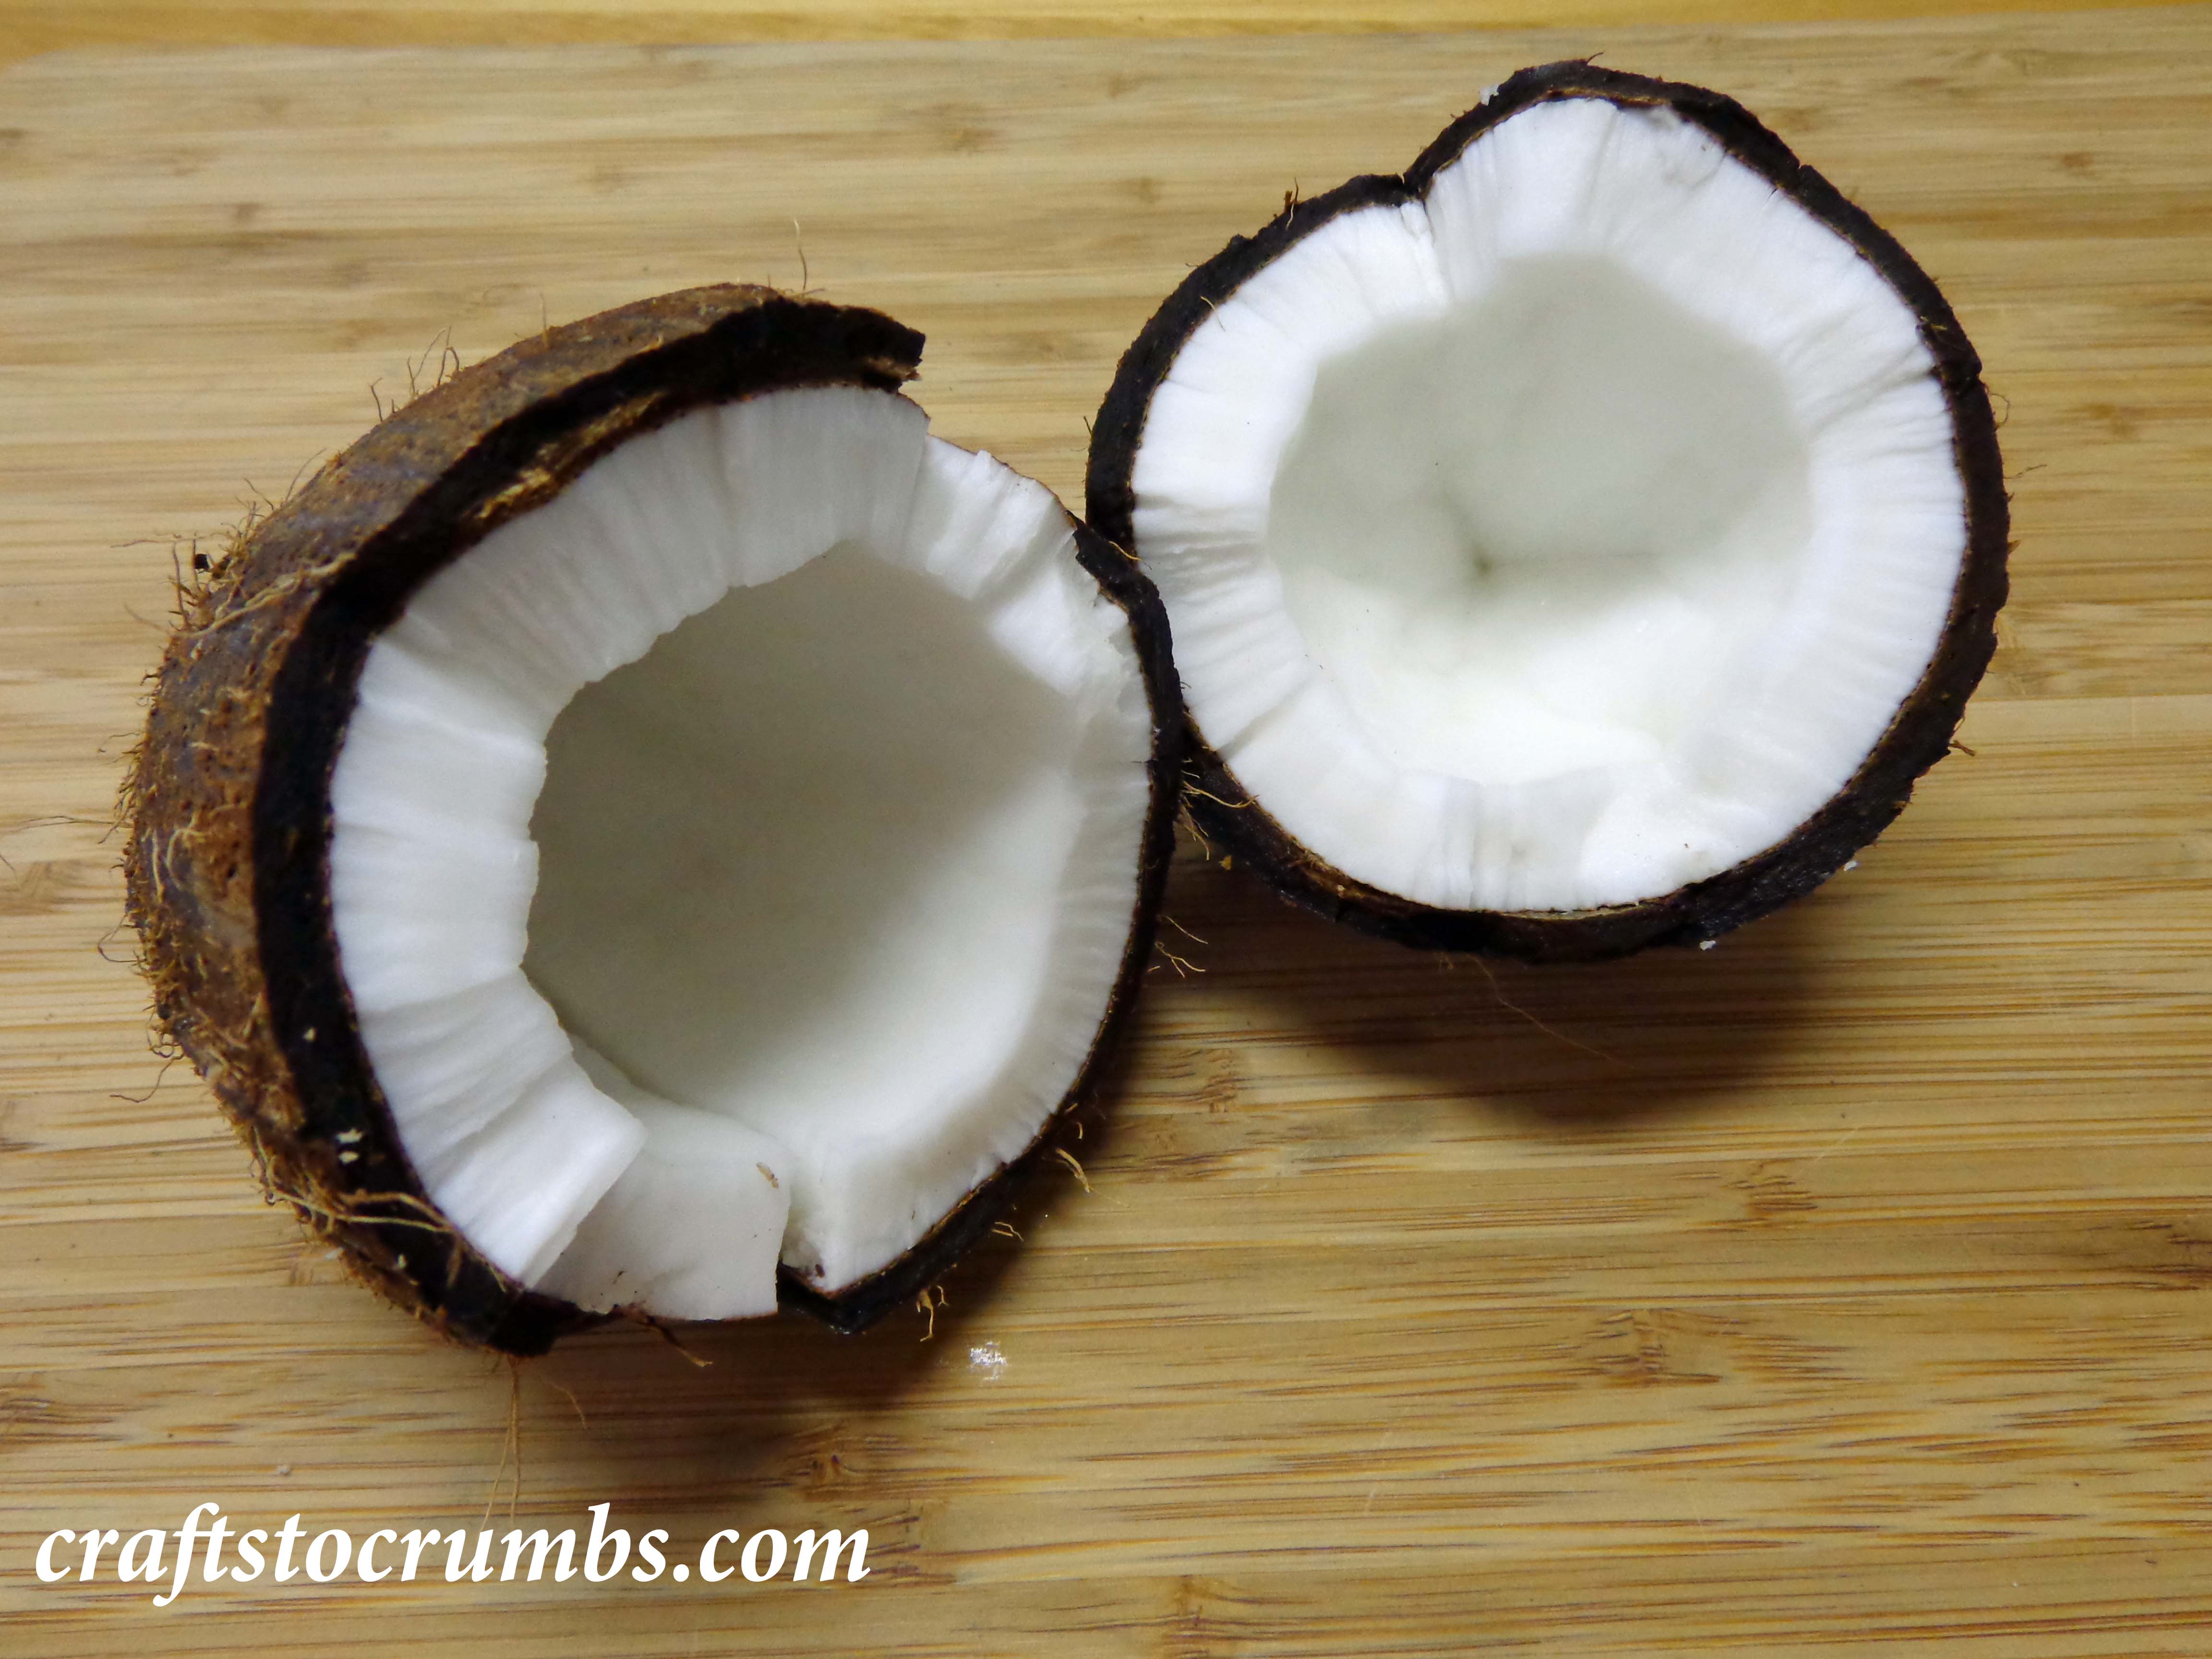 Crafts to Crumbs cracked coconut